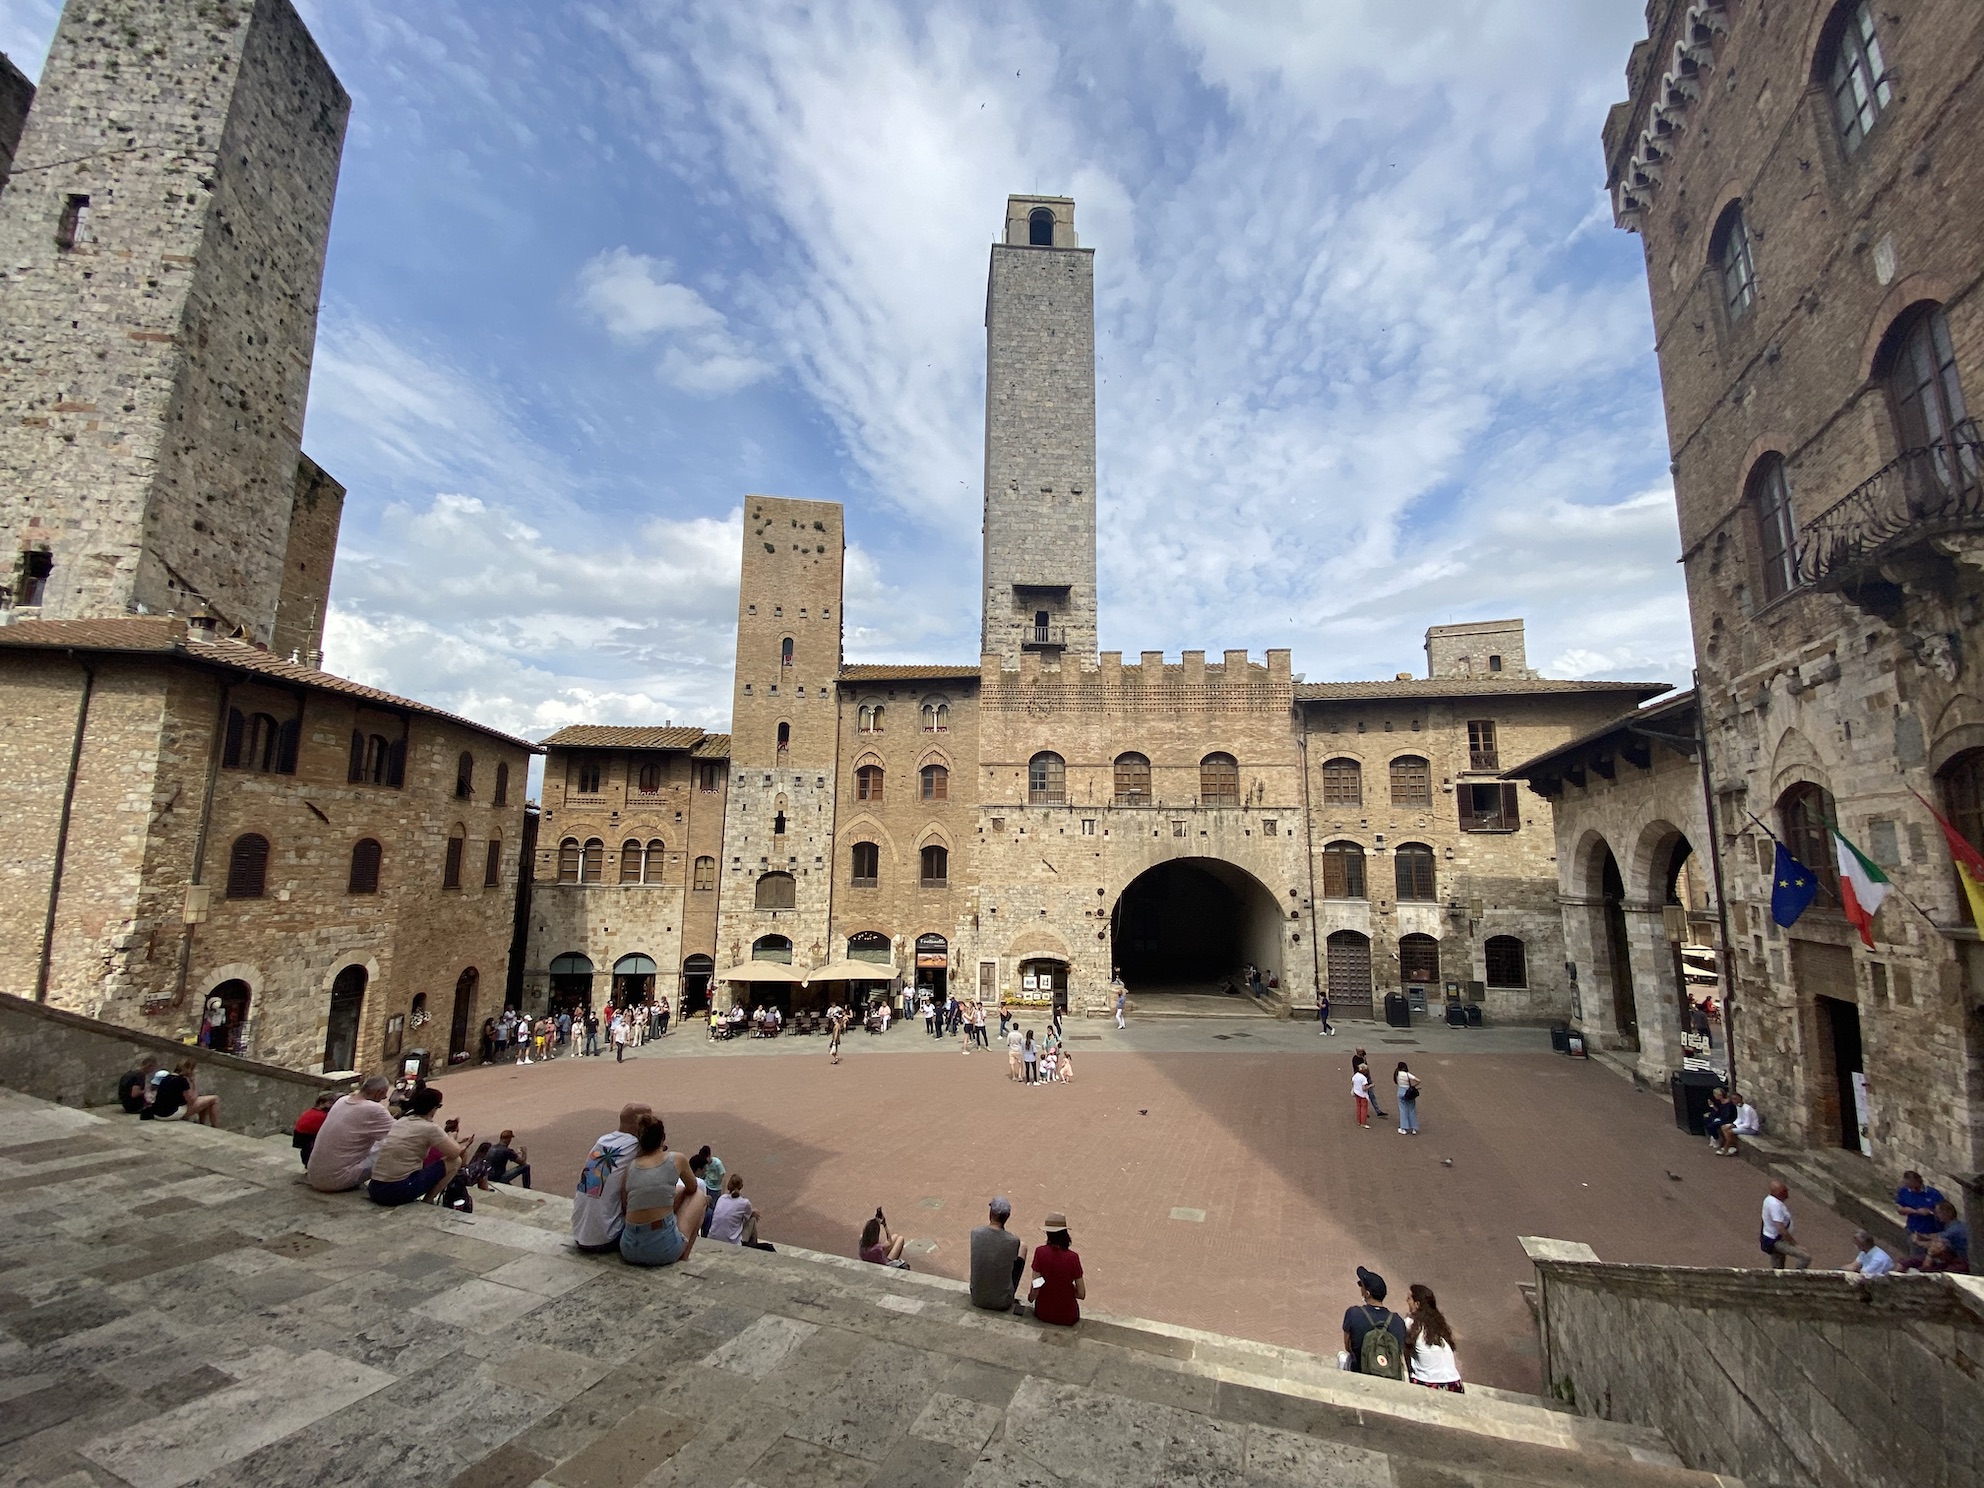 San Gimignano na Toscana: como visitar a cidade que parou no tempo